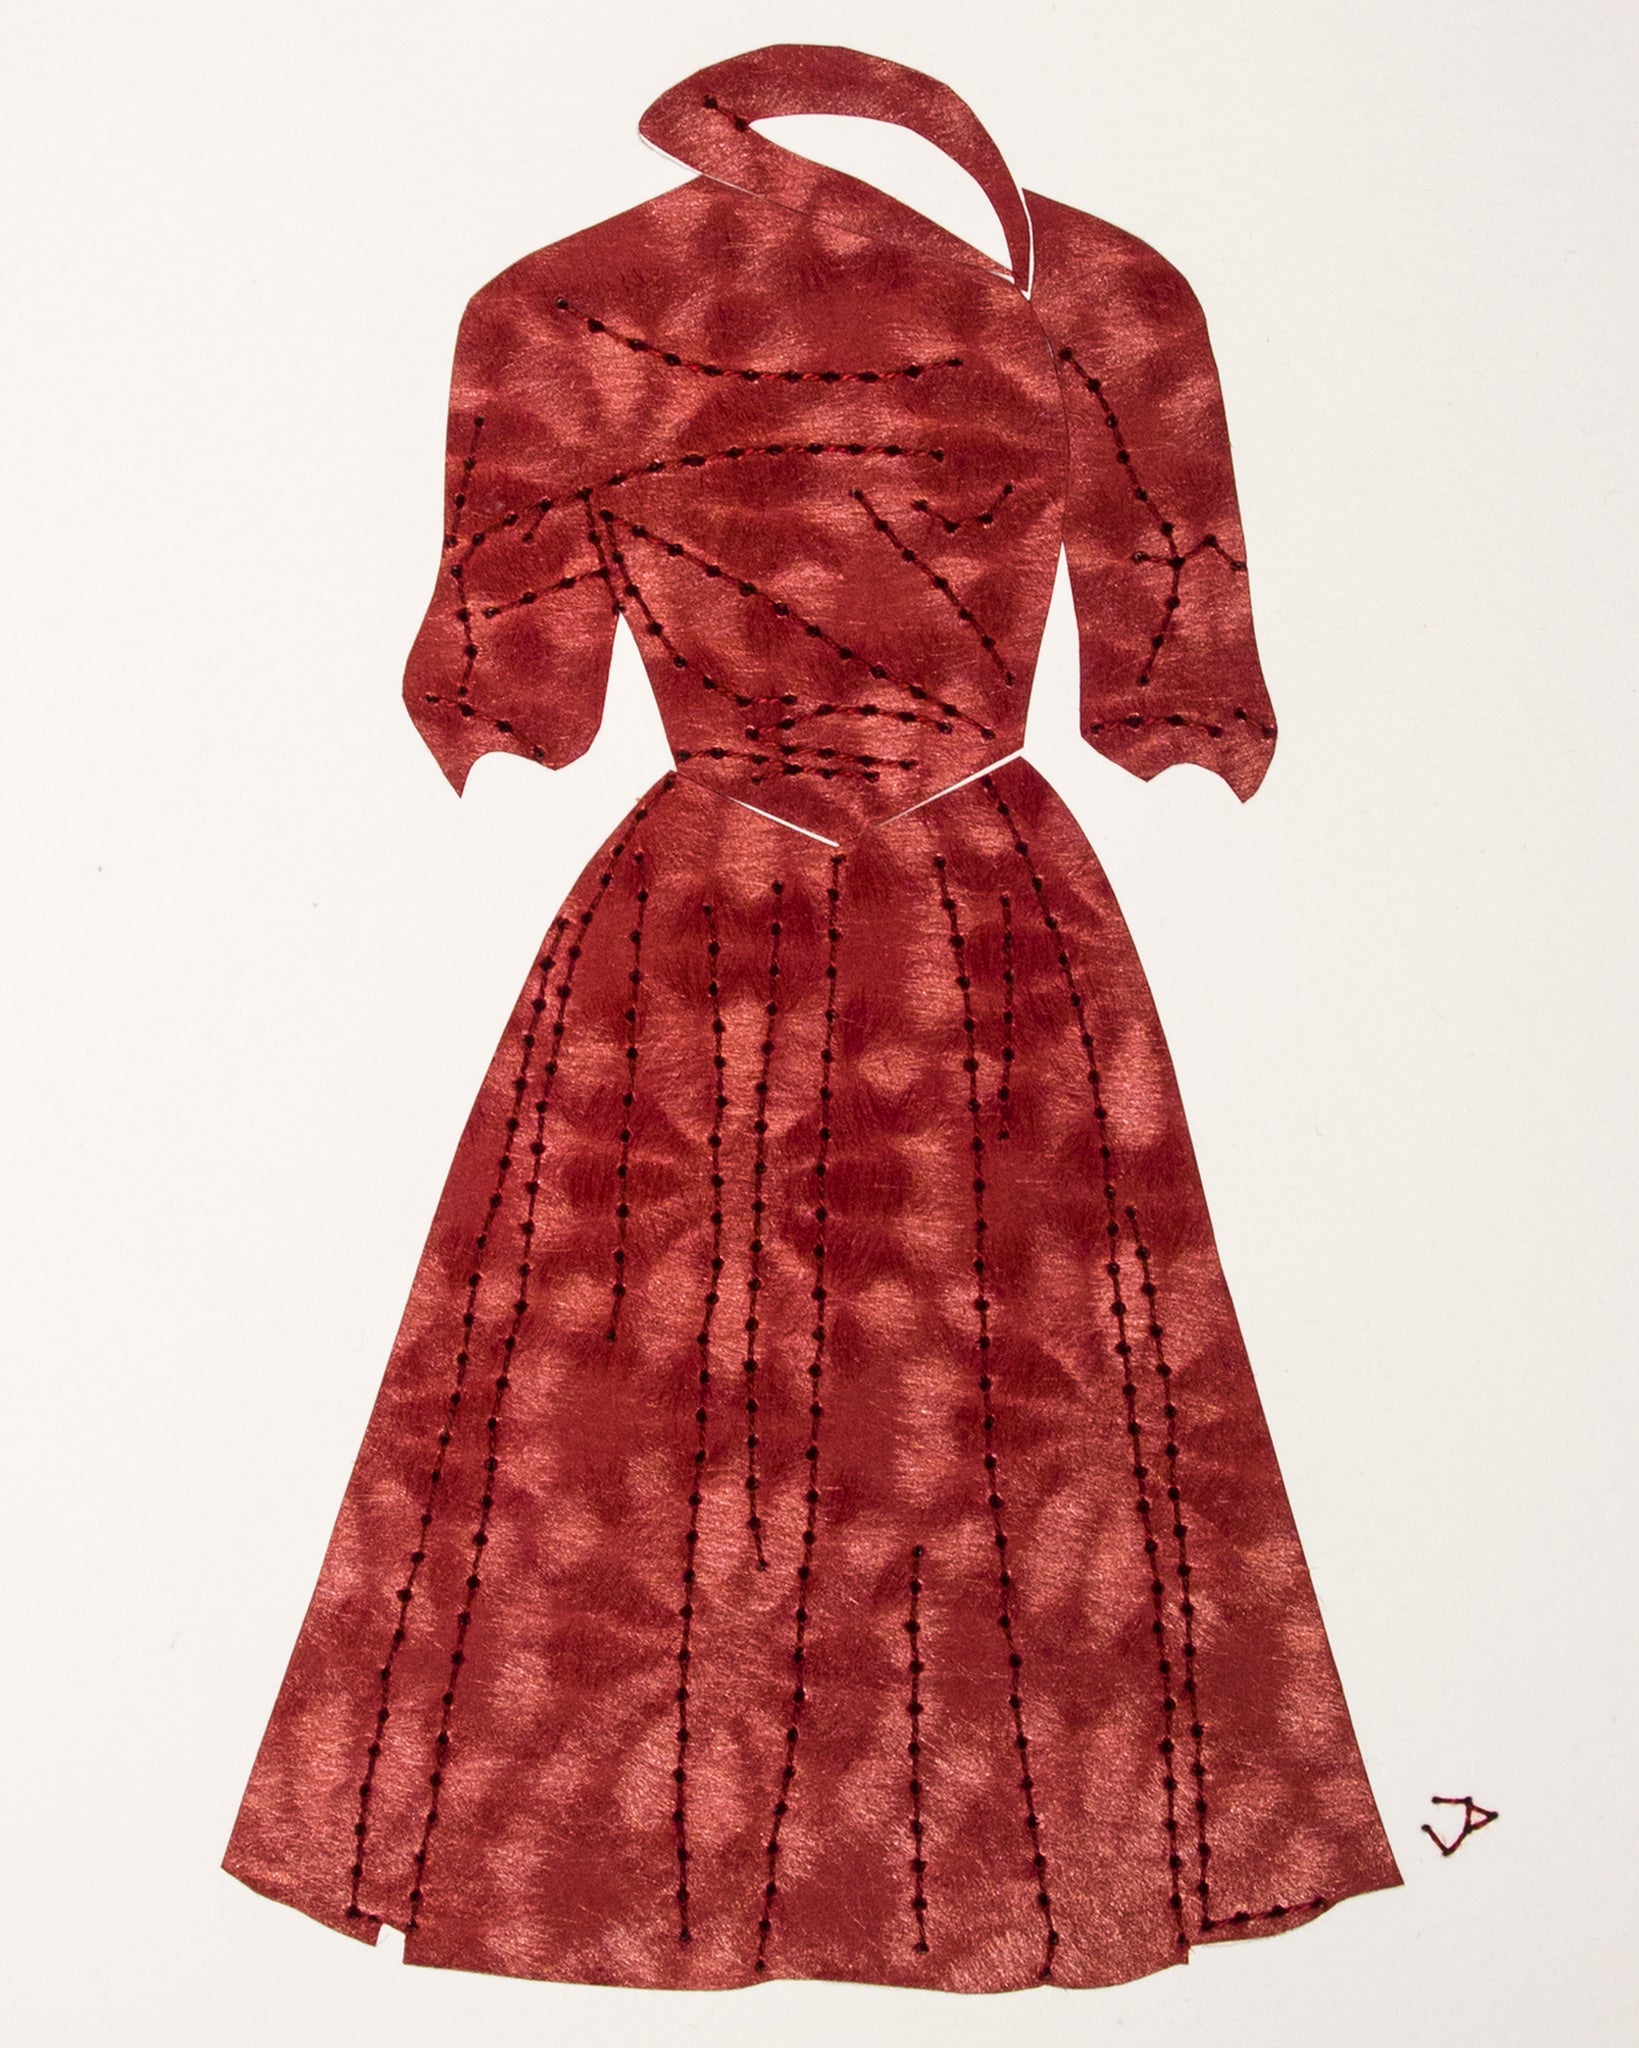 Dress #062: 1950s cocktail dress in wine. 2016